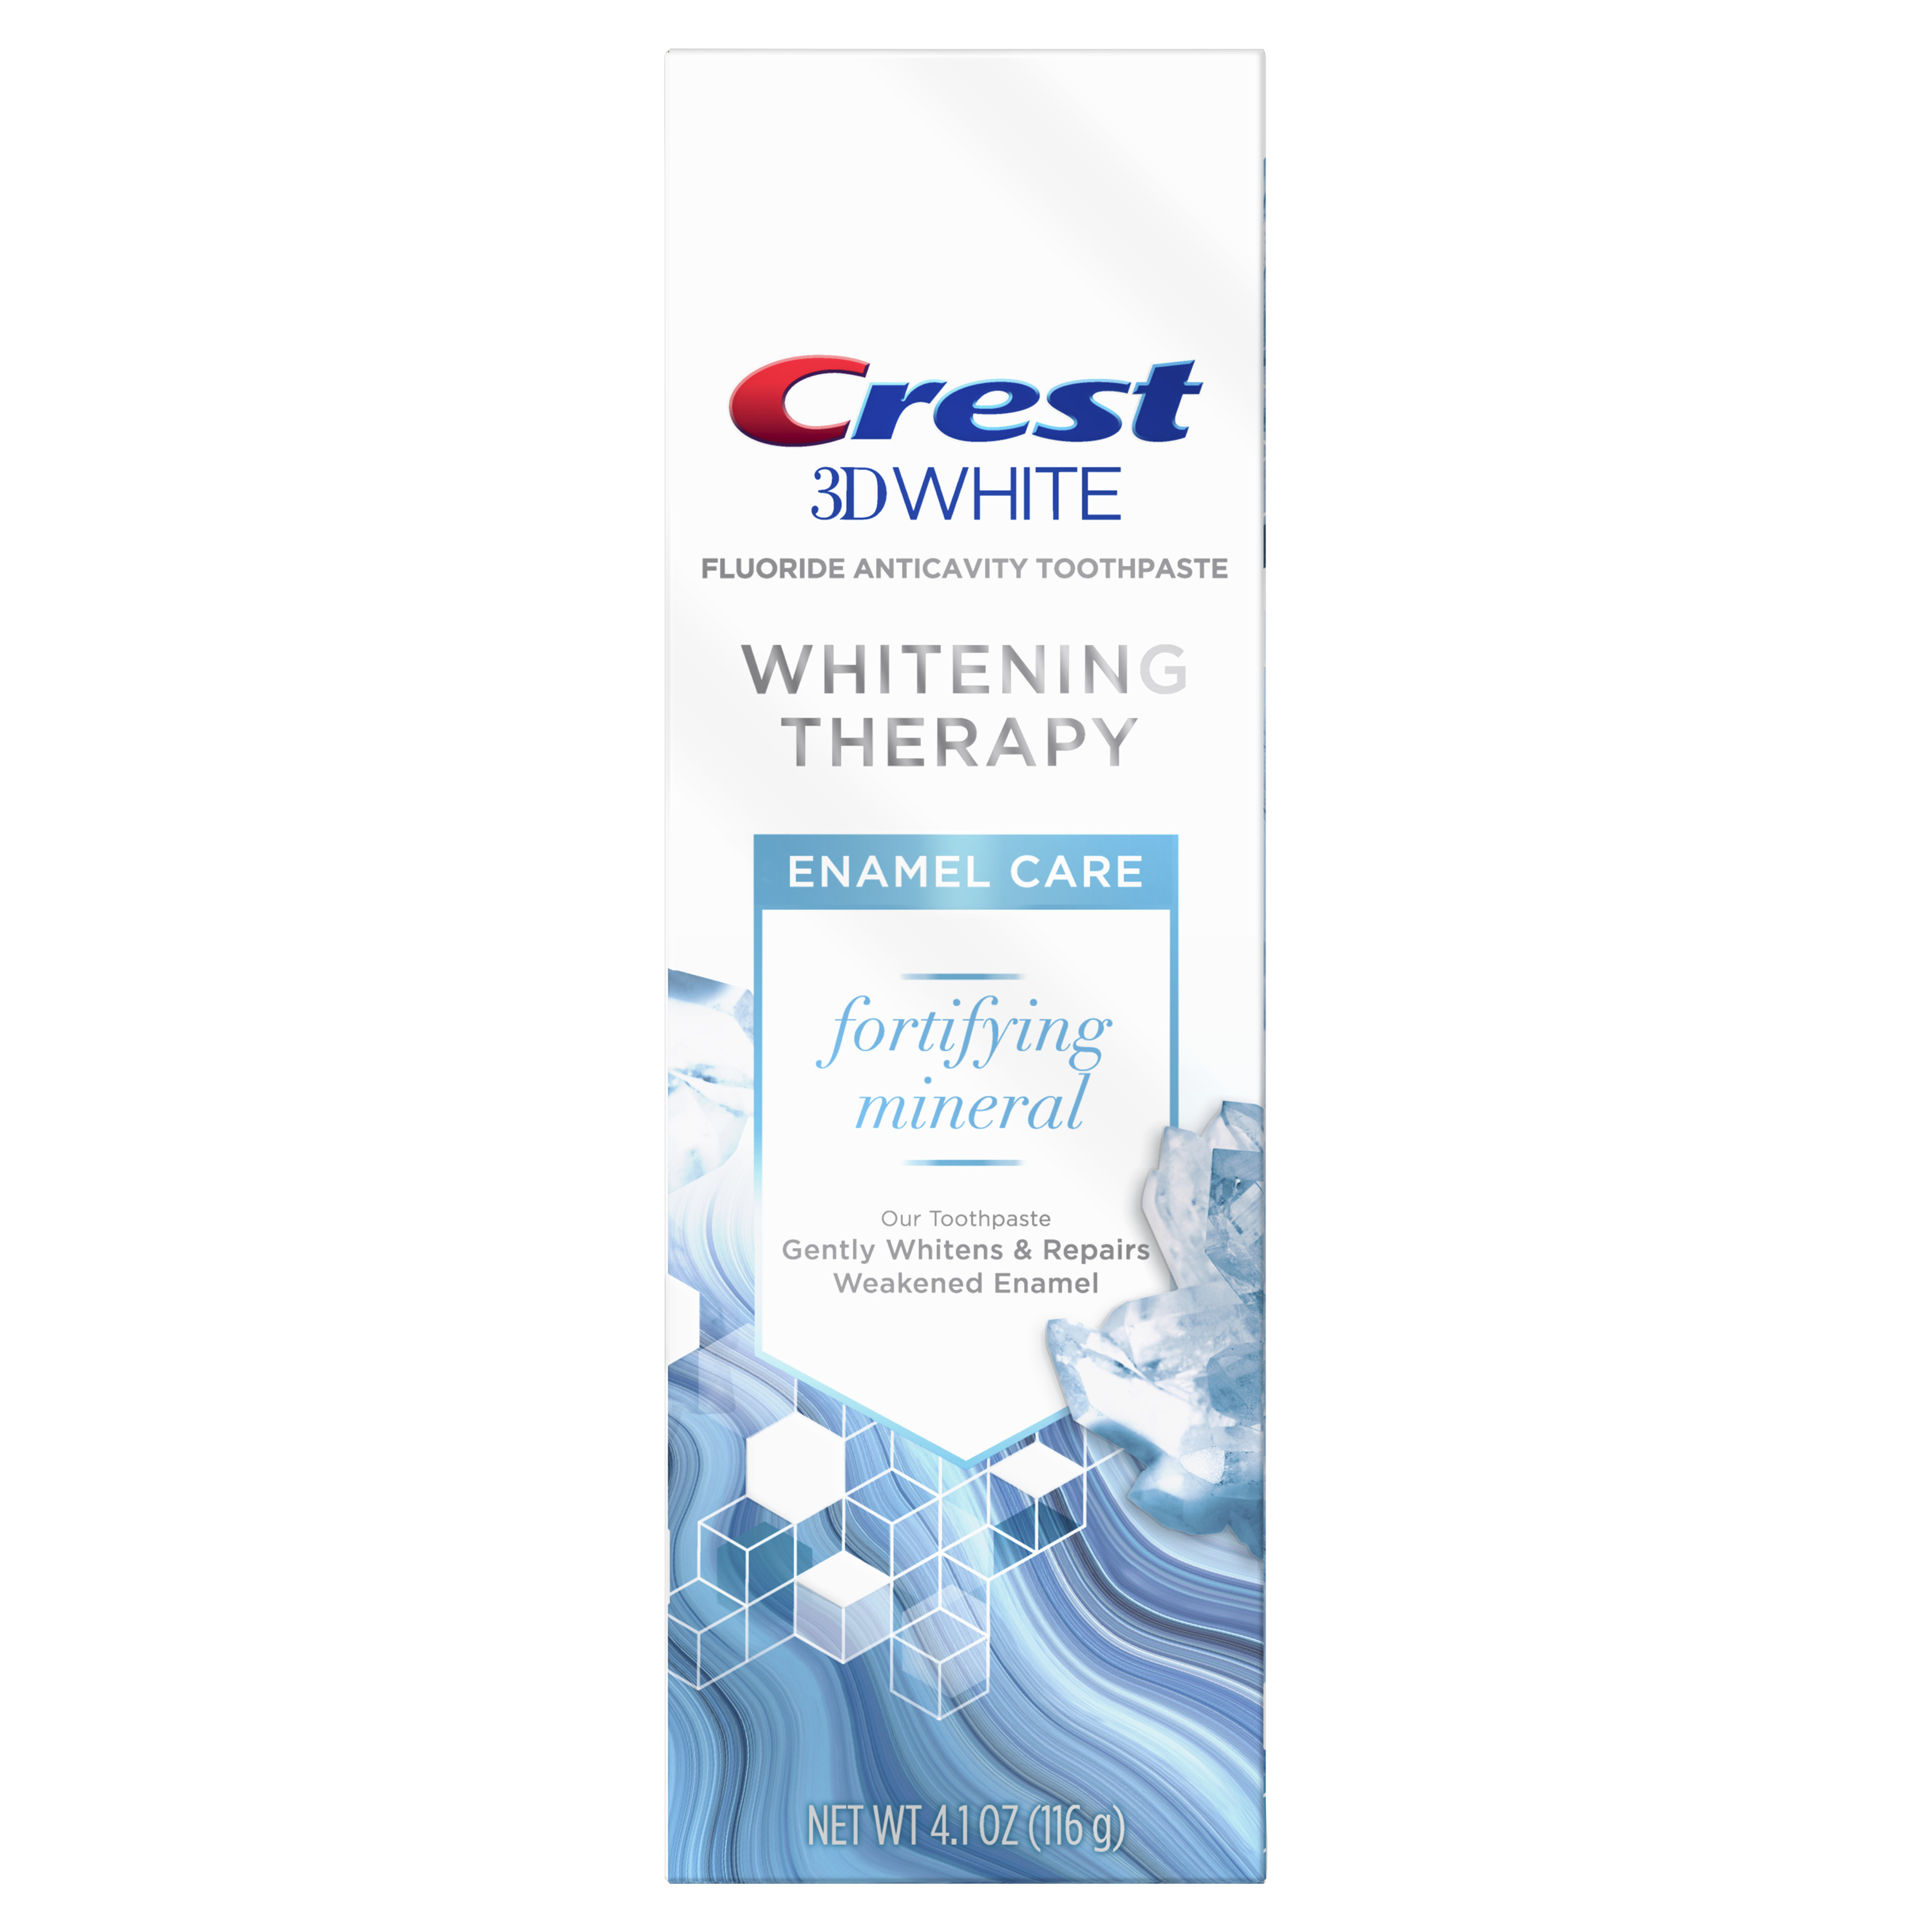 Crest 3D White Whitening Therapy Fluoride Toothpaste, Enamel, 4.1 oz - image 1 of 9